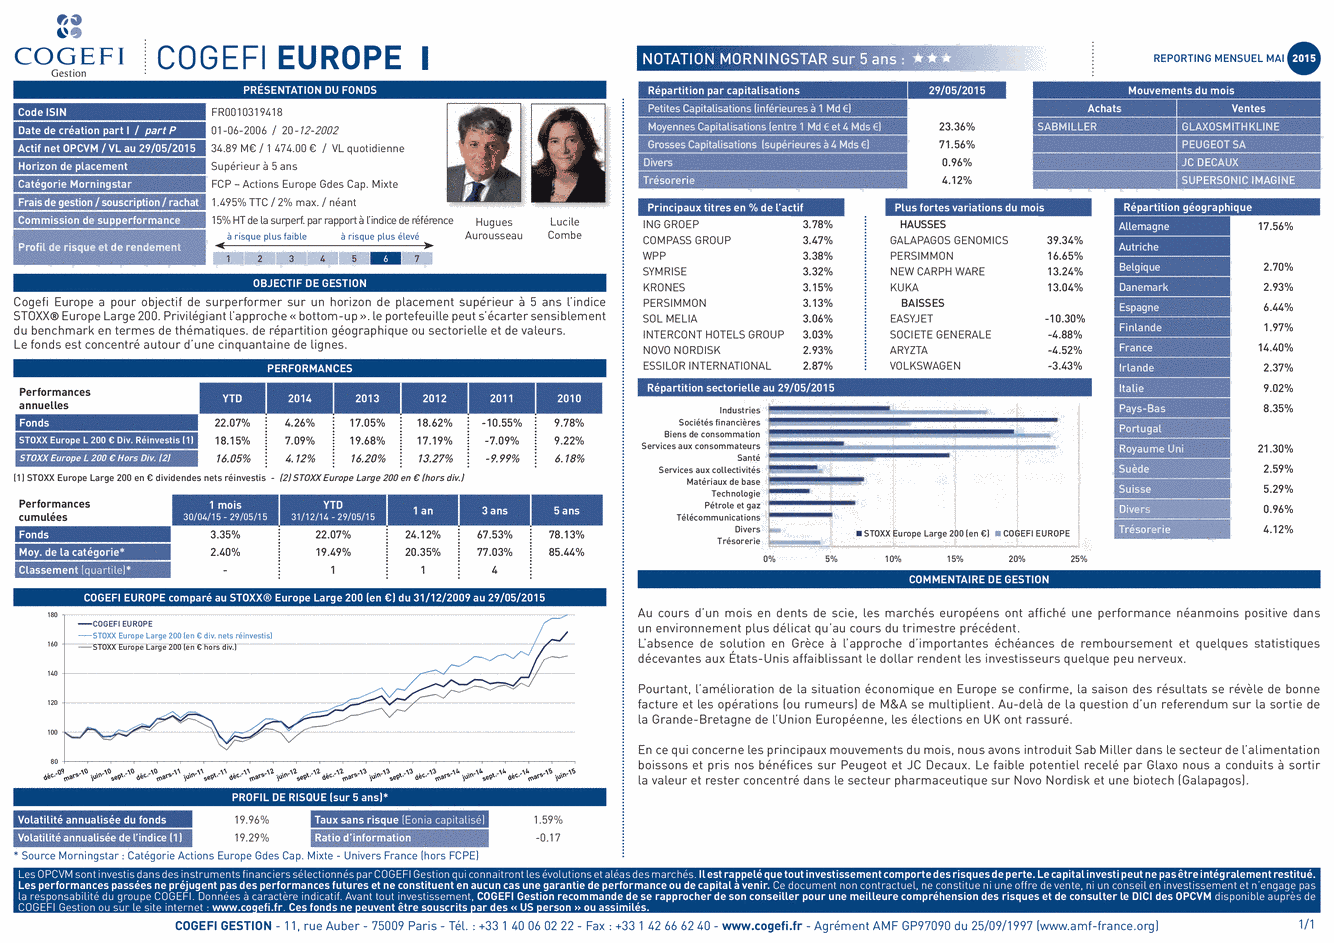 Fiche Produit Cogefi Europe I - 31/05/2015 - Français